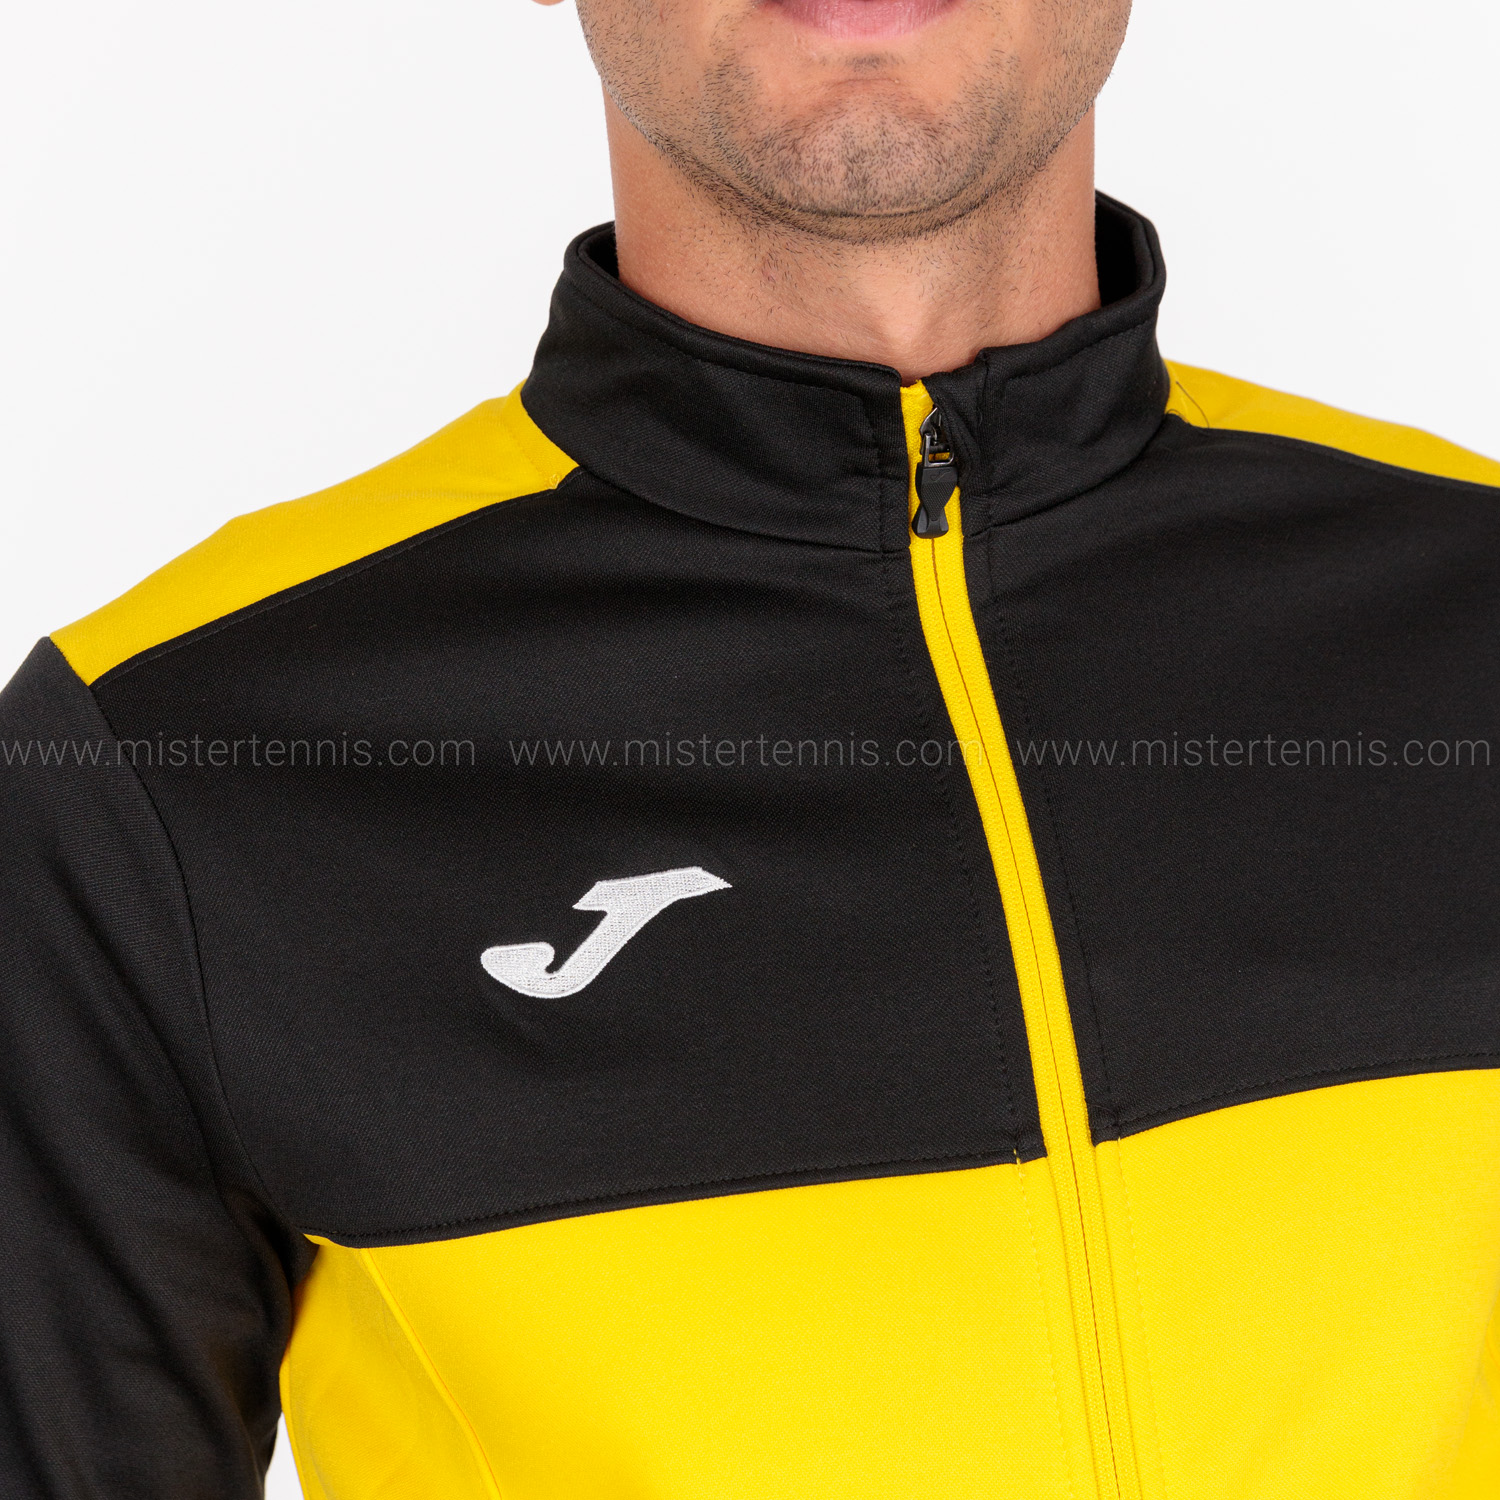 Joma Winner Jacket - Yellow/Black